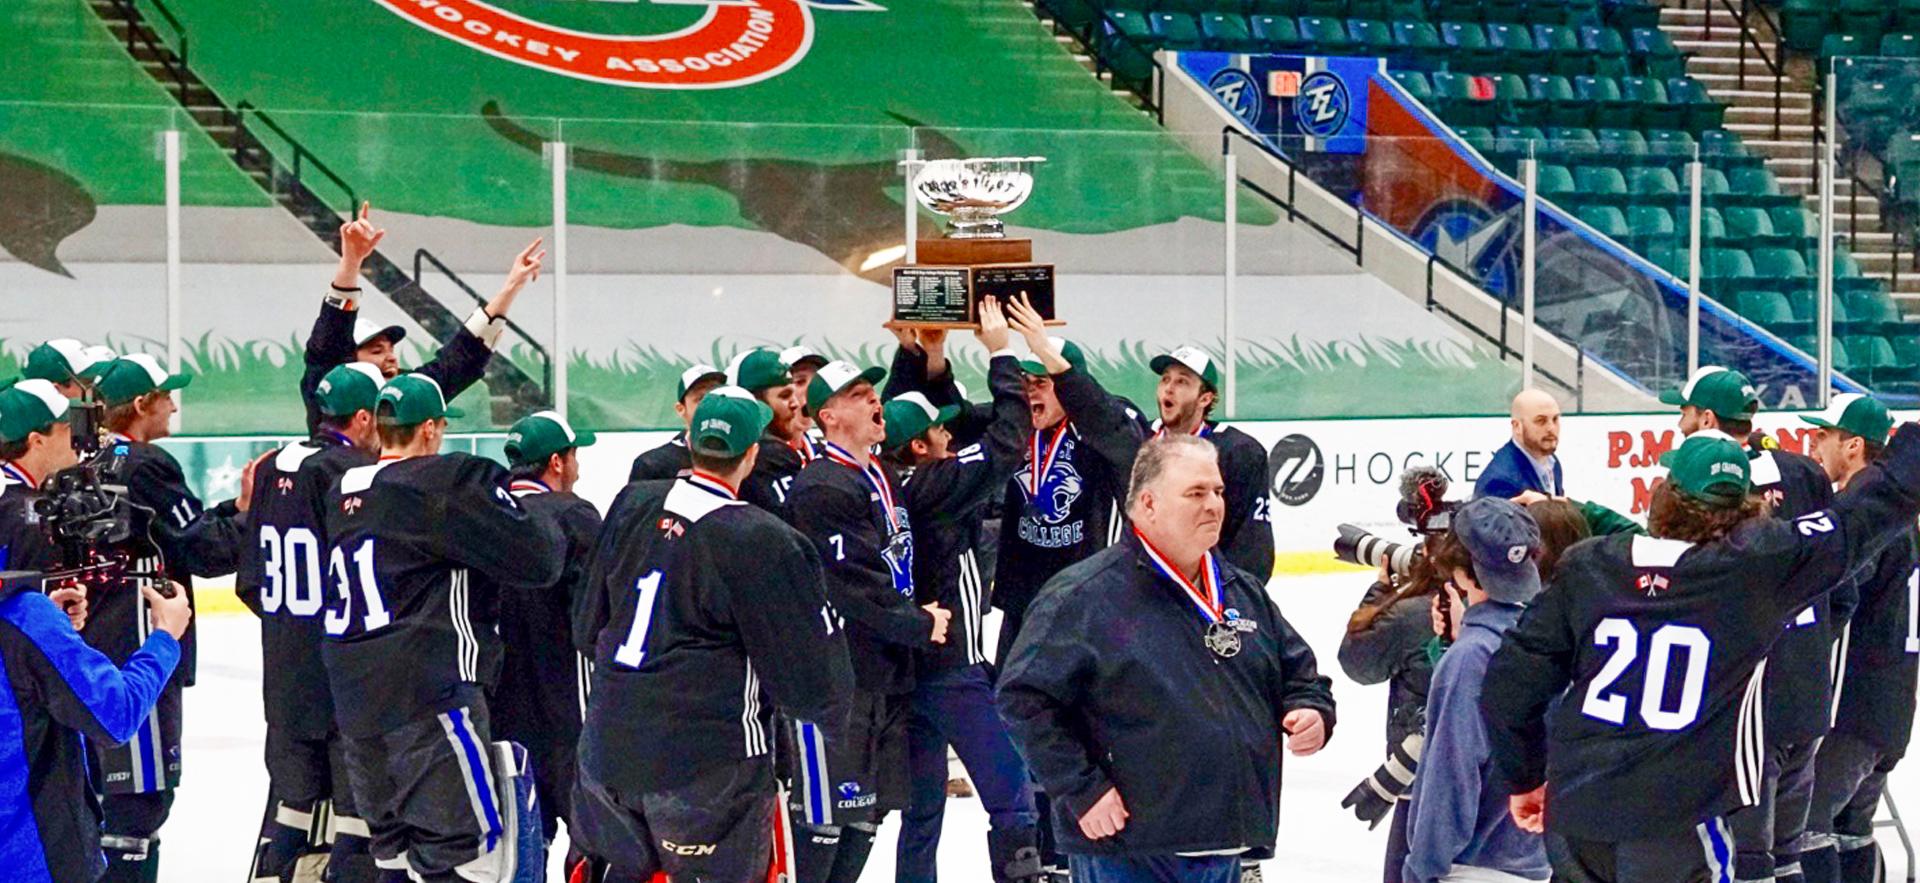 Men's ACHA Hockey Champions celebrating on ice